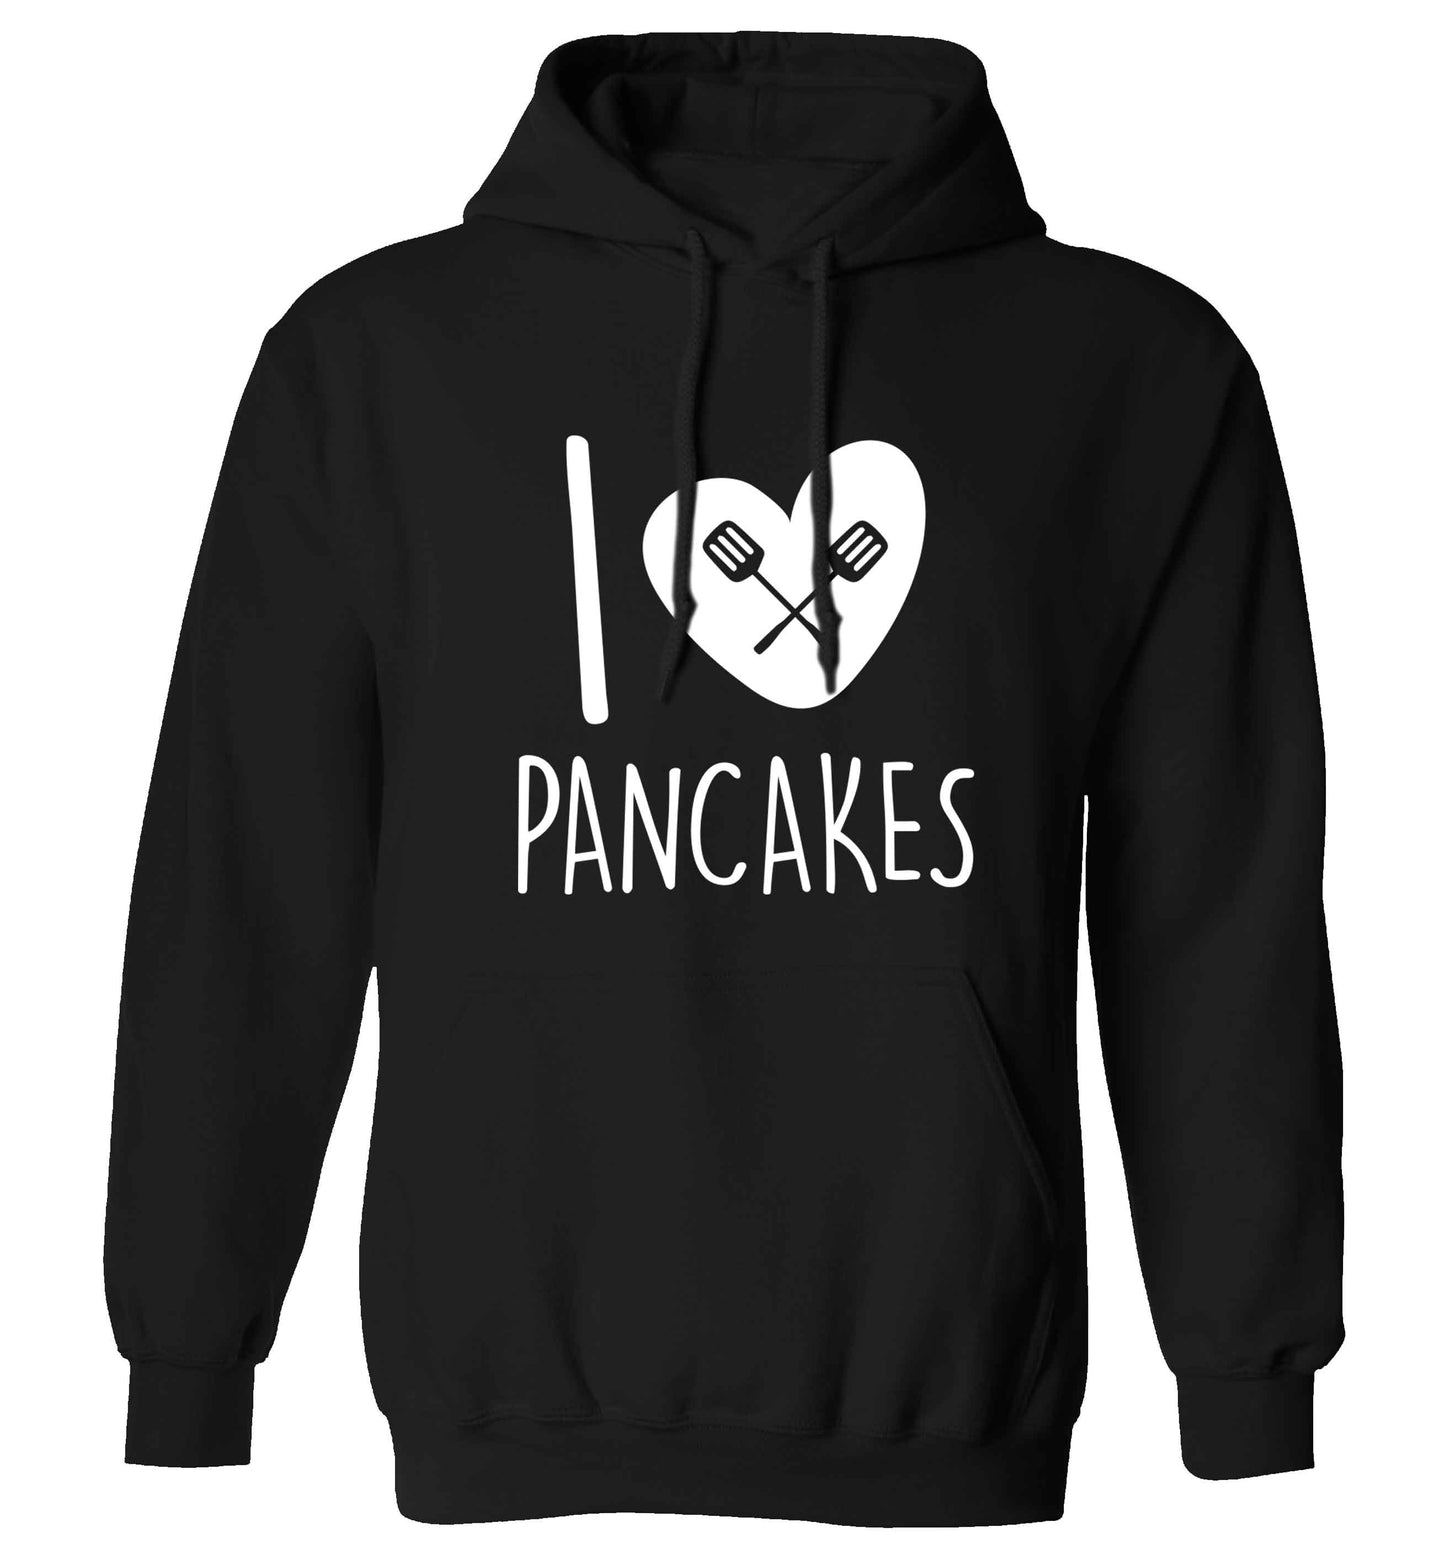 I love pancakes adults unisex black hoodie 2XL